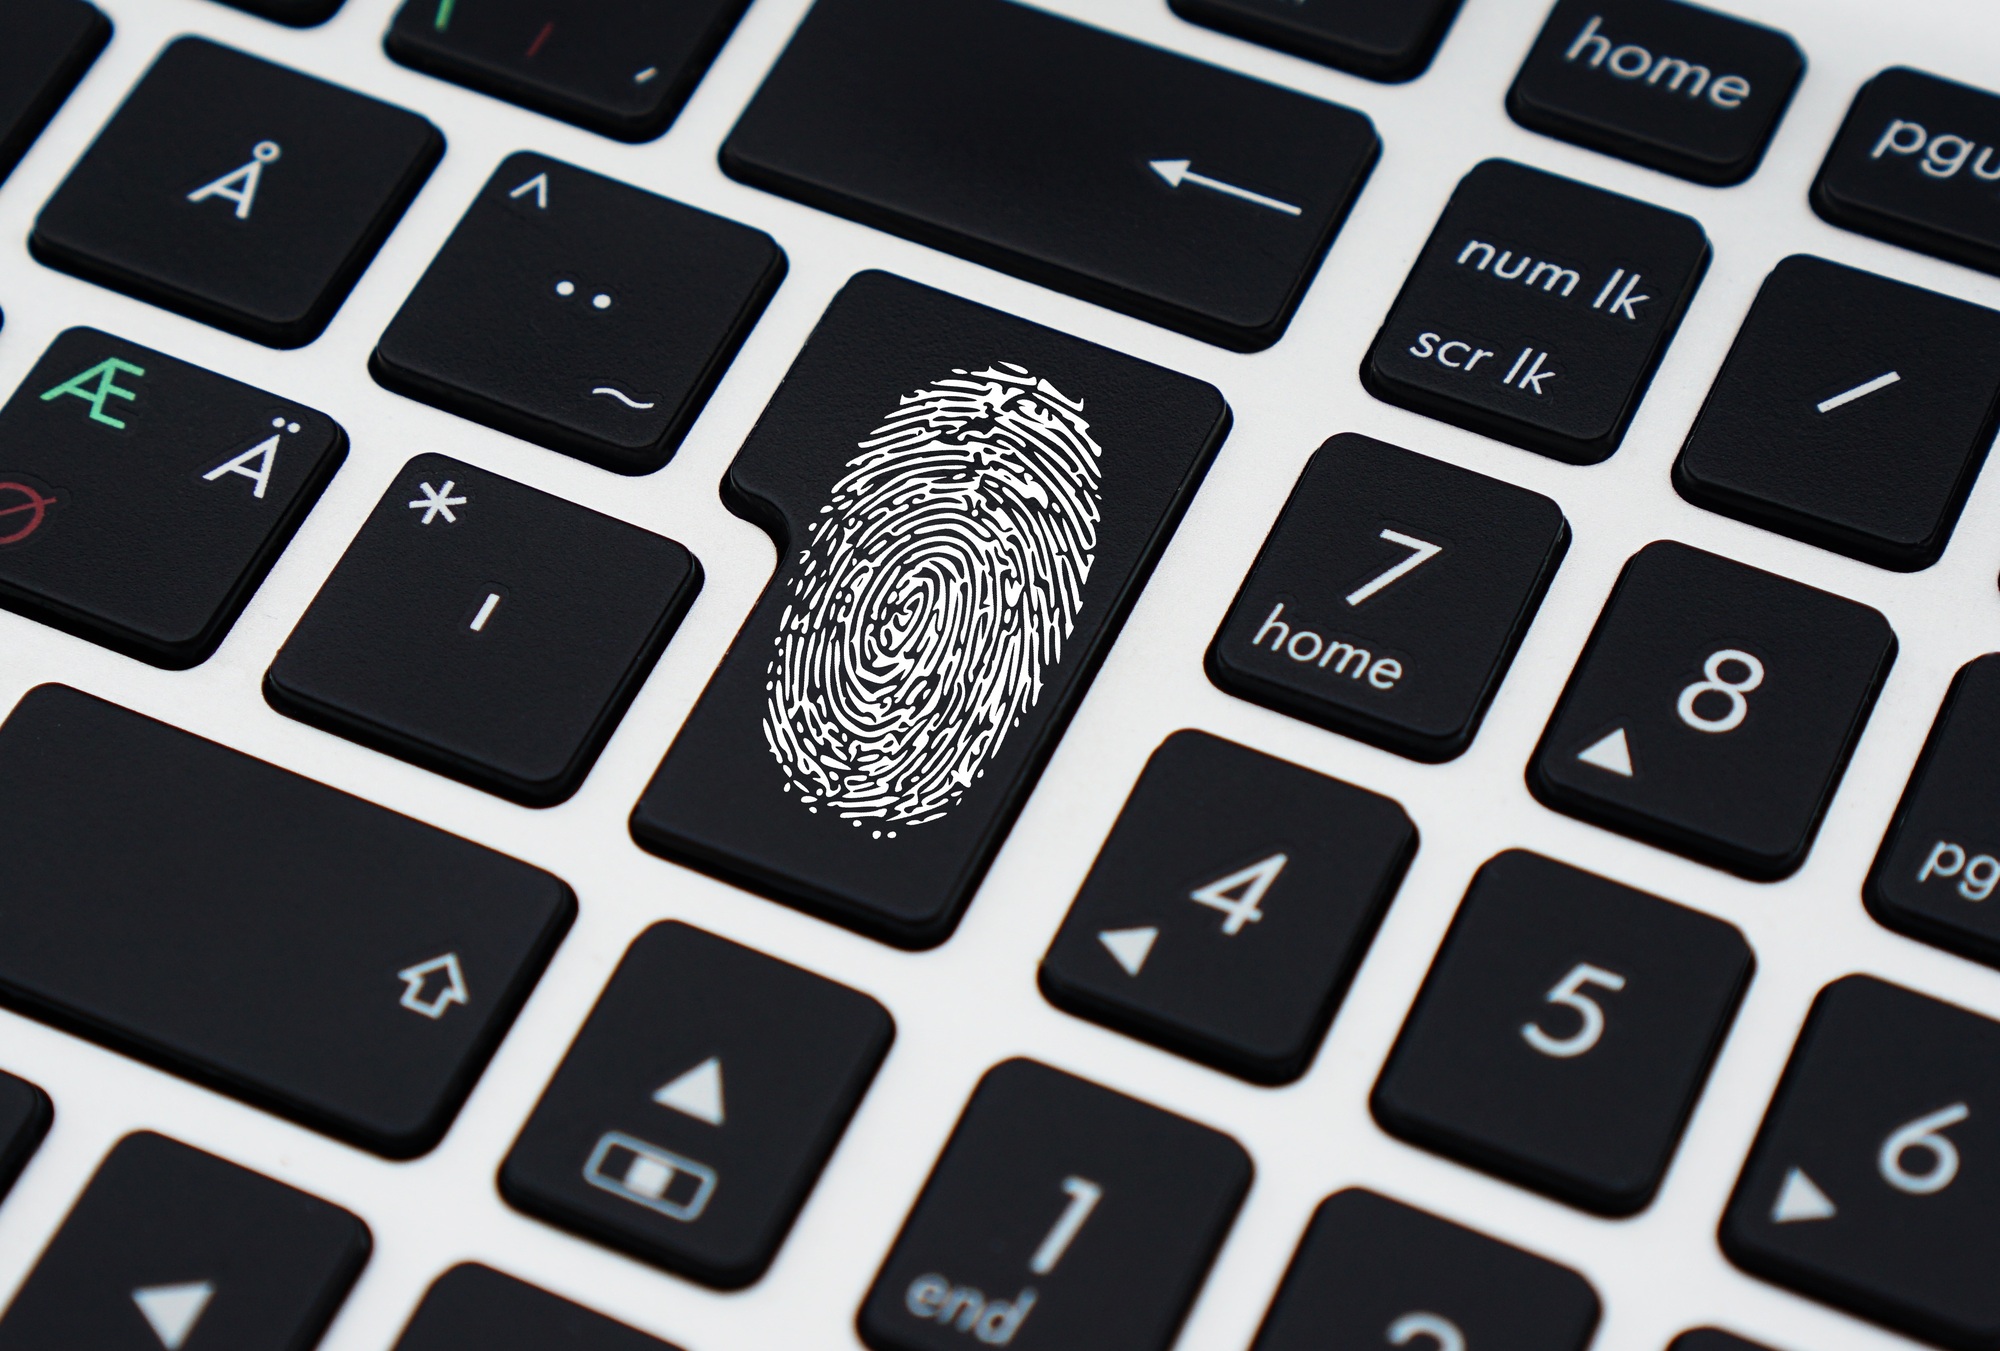 fingerprint security button on keyboard